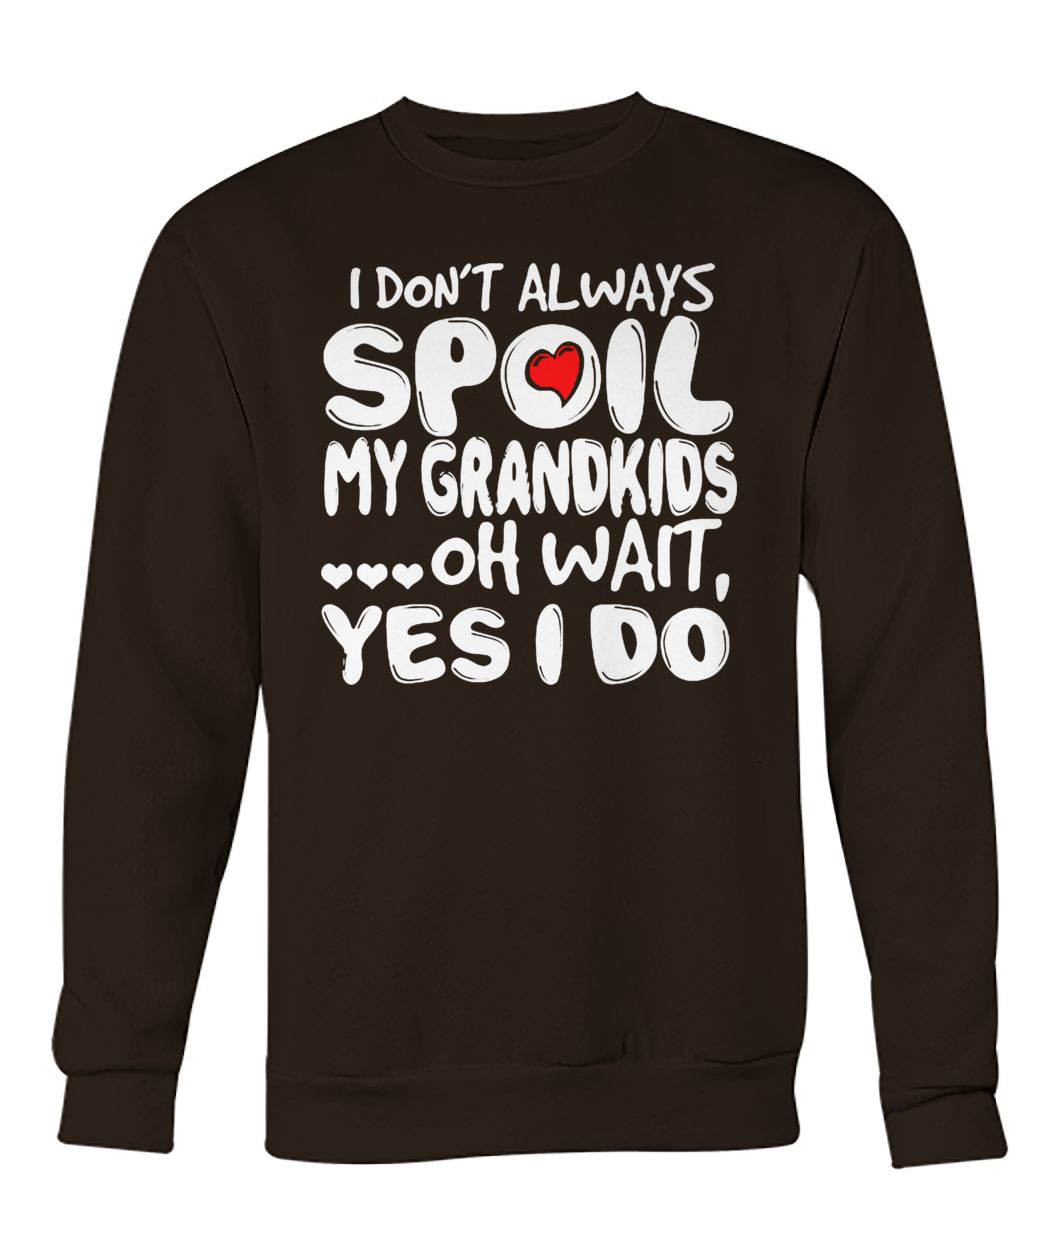 I don't always spoil my grandkids oh wait yes I do crew neck sweatshirt